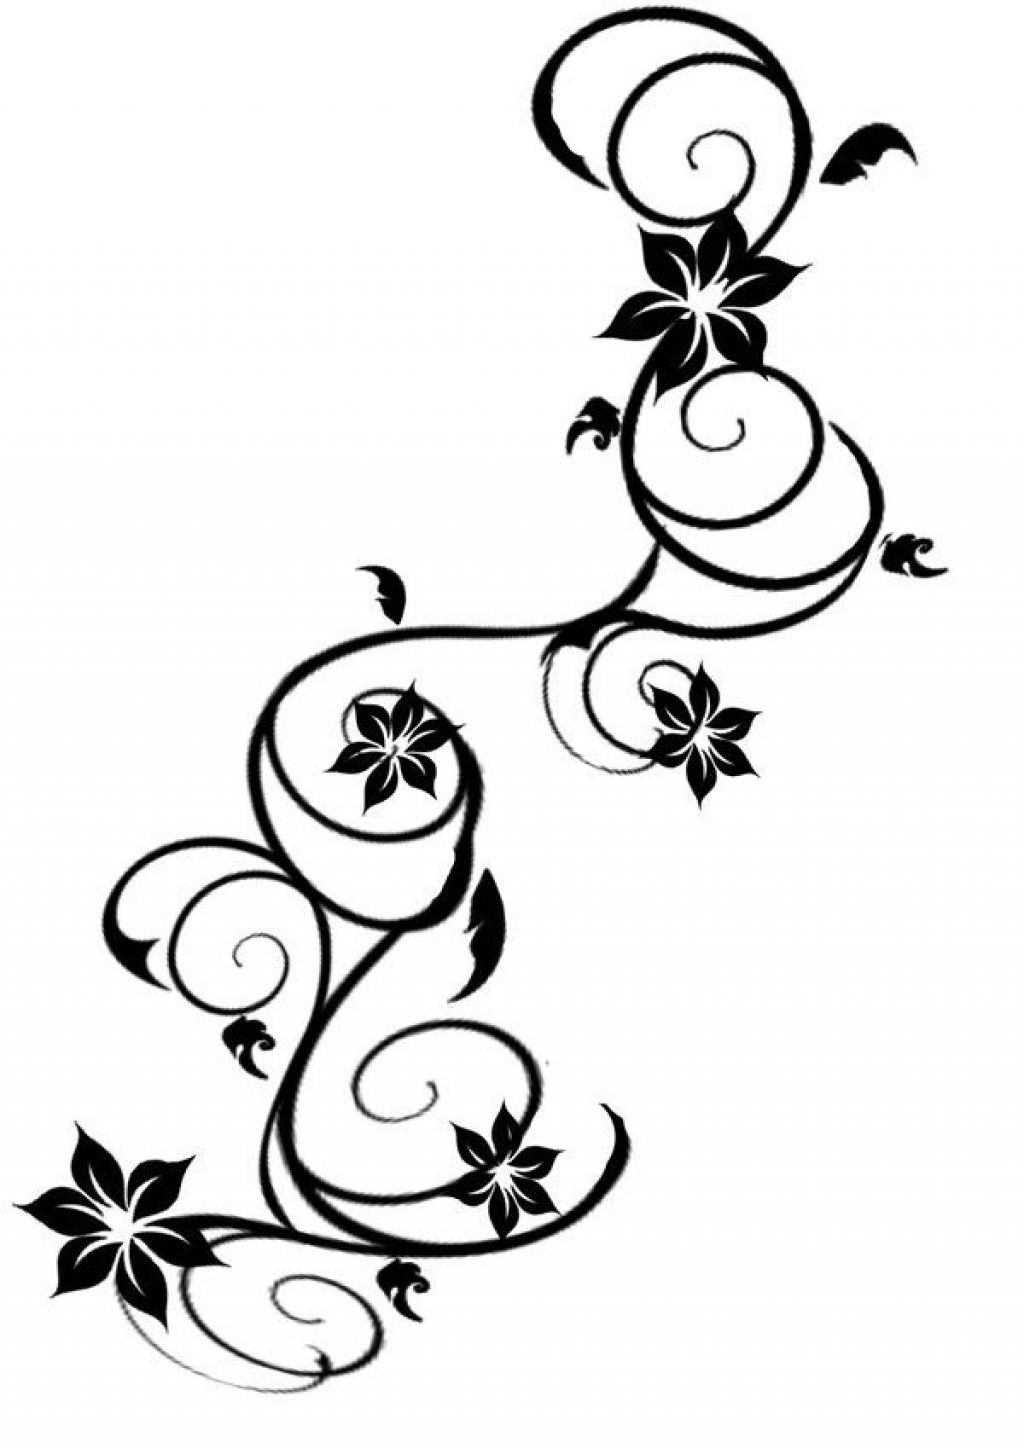 Swirly Floral Vine Foot Pinterest - Great Tattoo Design